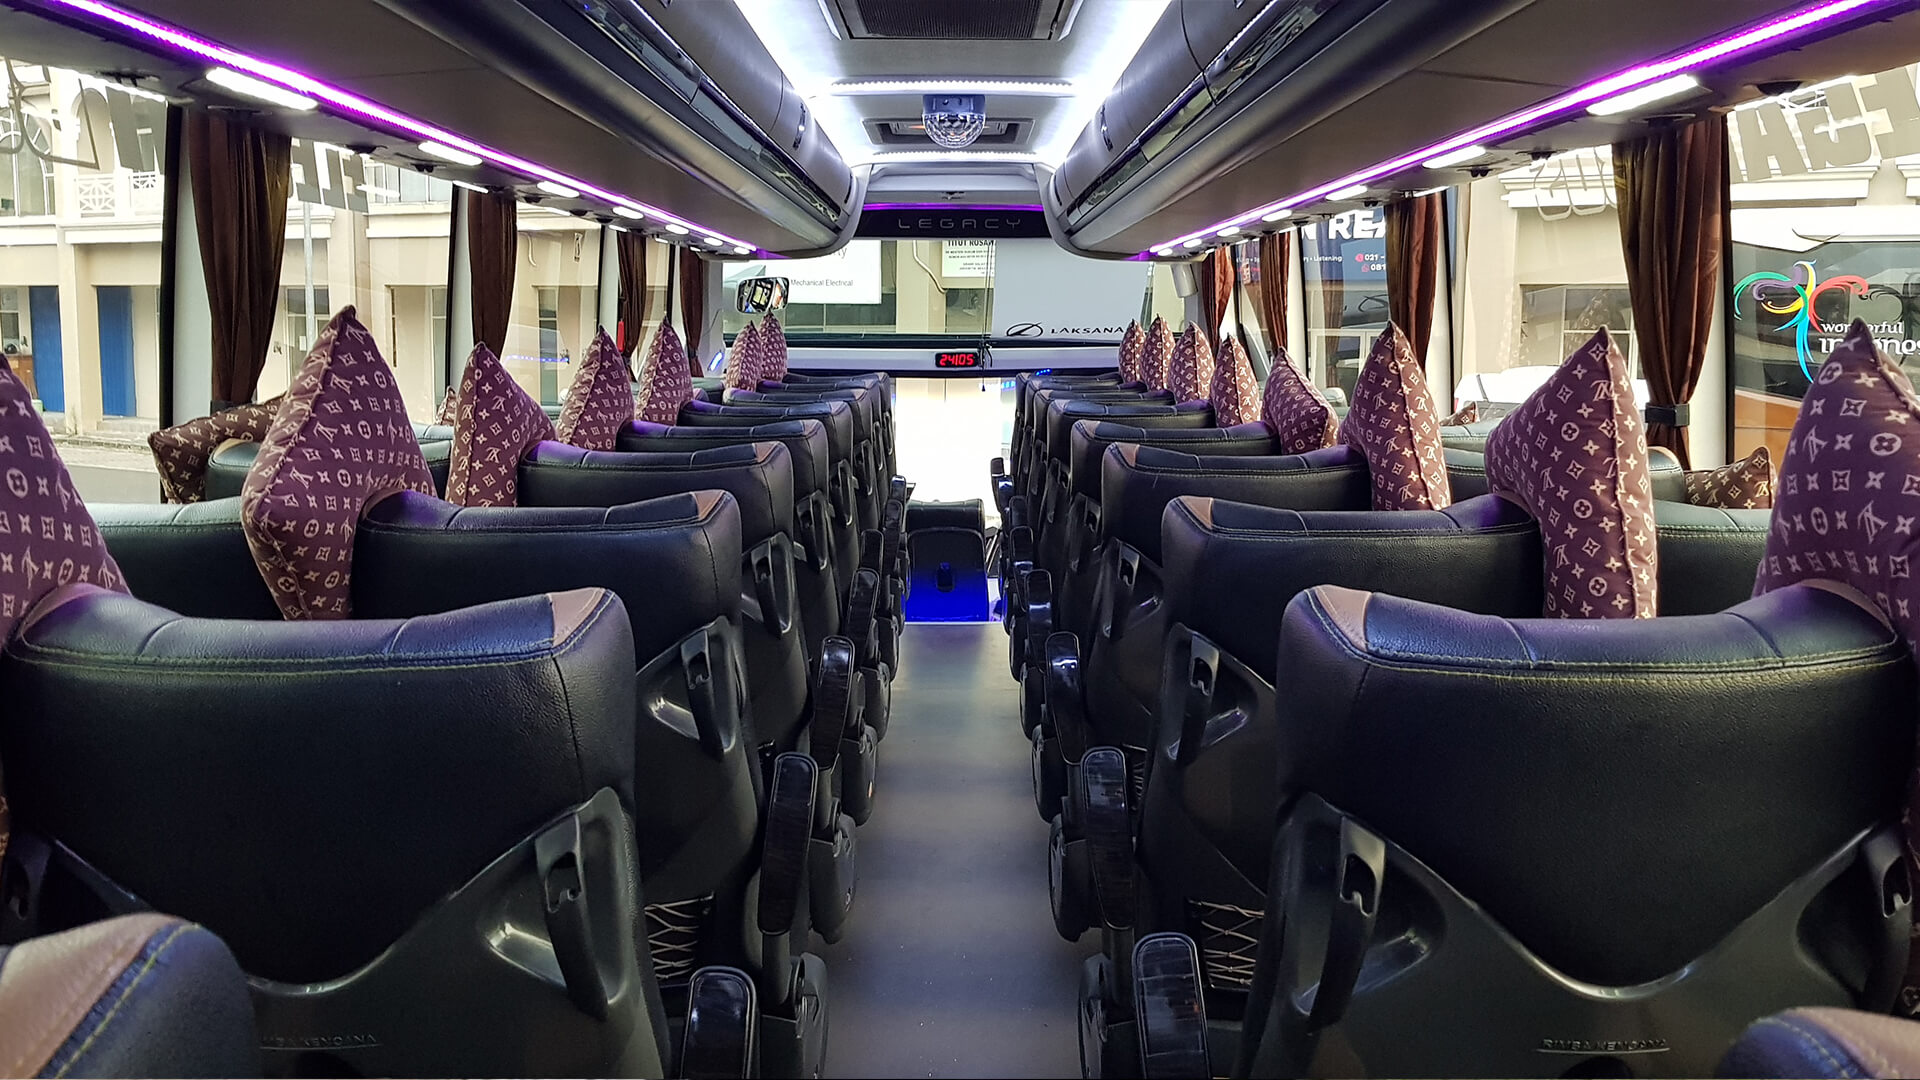 Sewa Bus Pariwisata Jakarta dalam